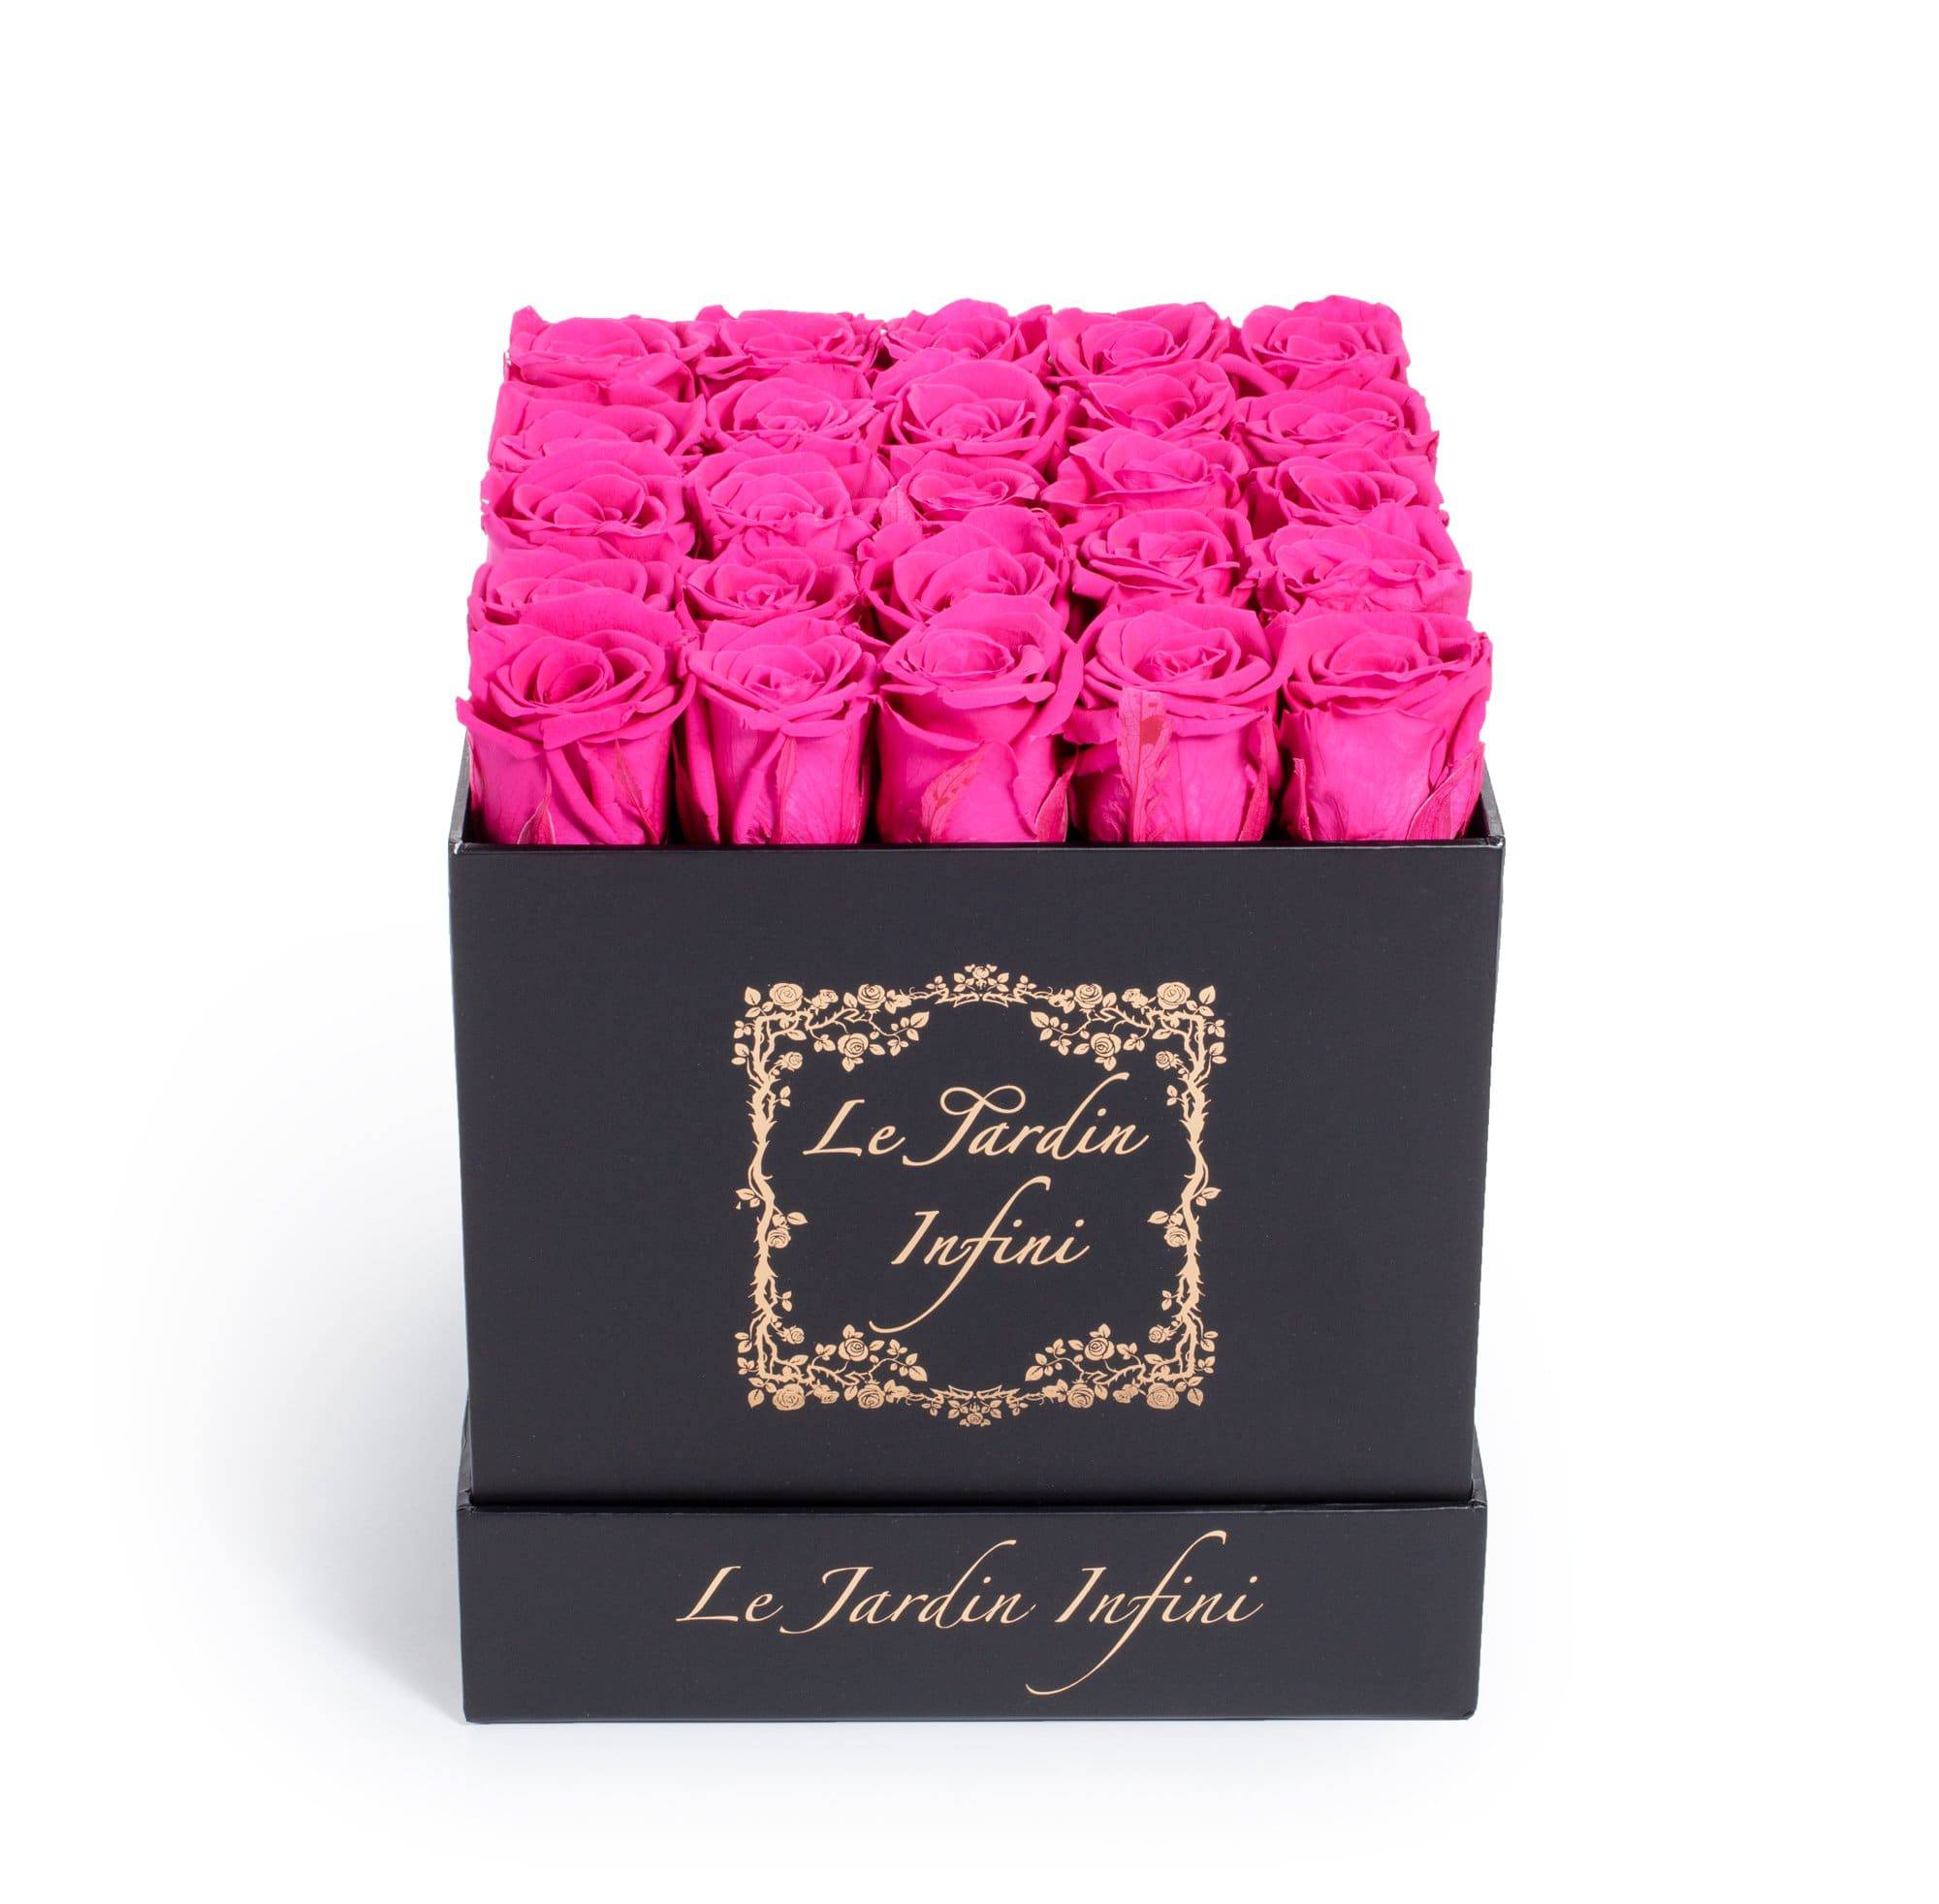 Hot Pink Preserved Roses - Medium Square Black Box - Le Jardin Infini Roses in a Box